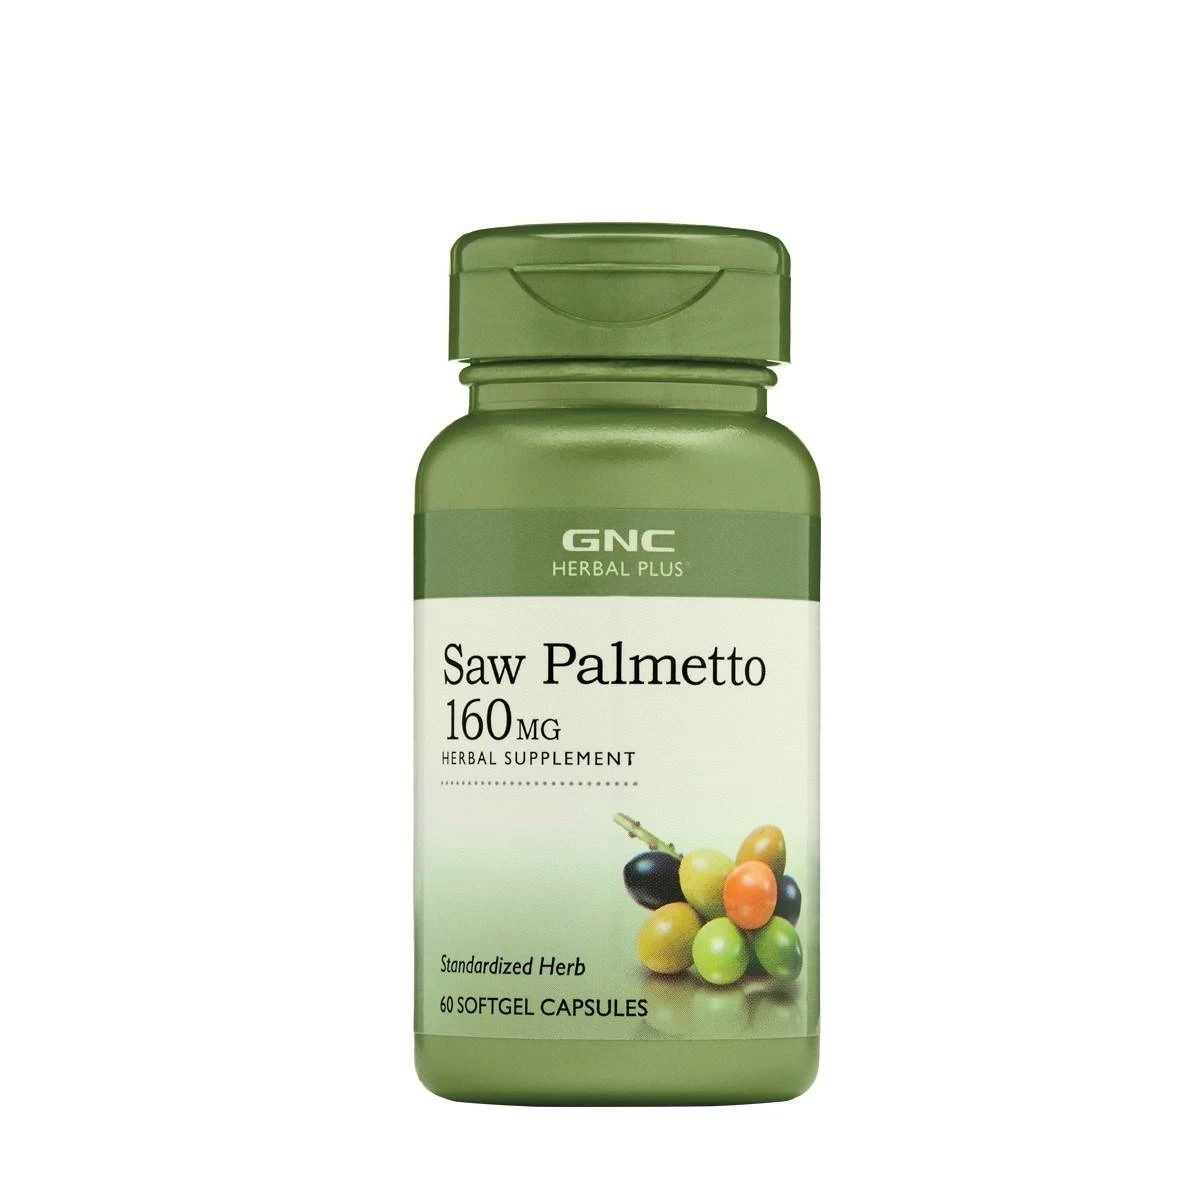 Herbal plus saw palmetto 160mg, extract standardizat de palmier pitic, 60cps - gnc